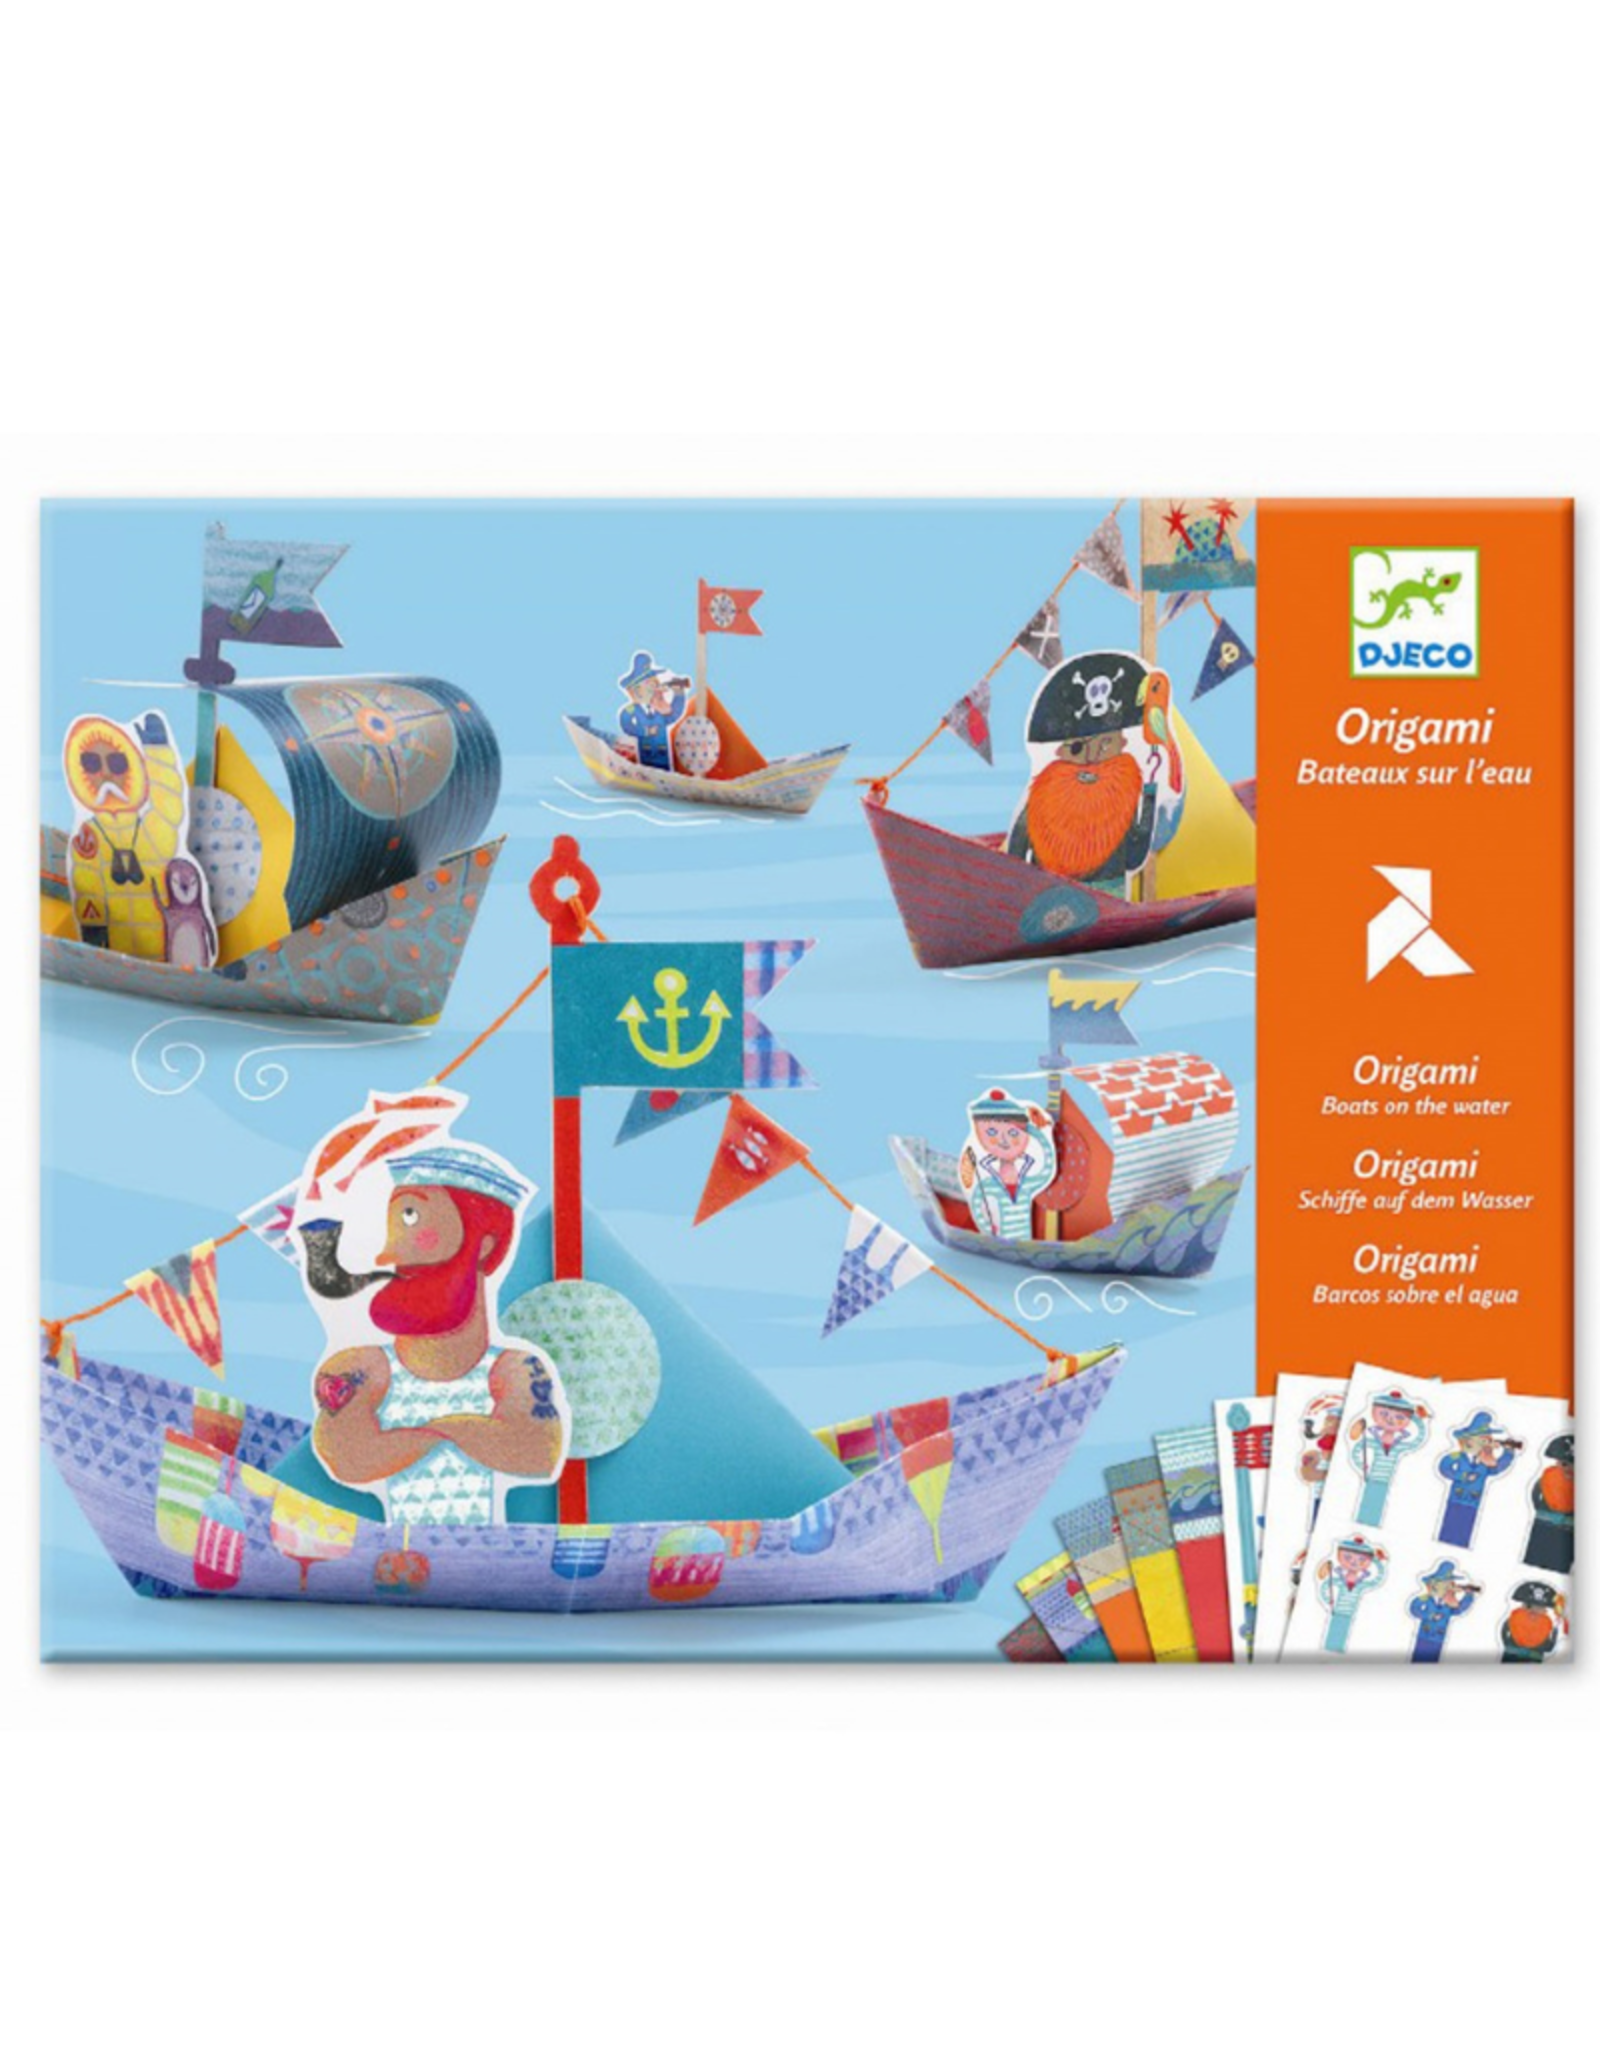 Djeco Origami -Floating boats